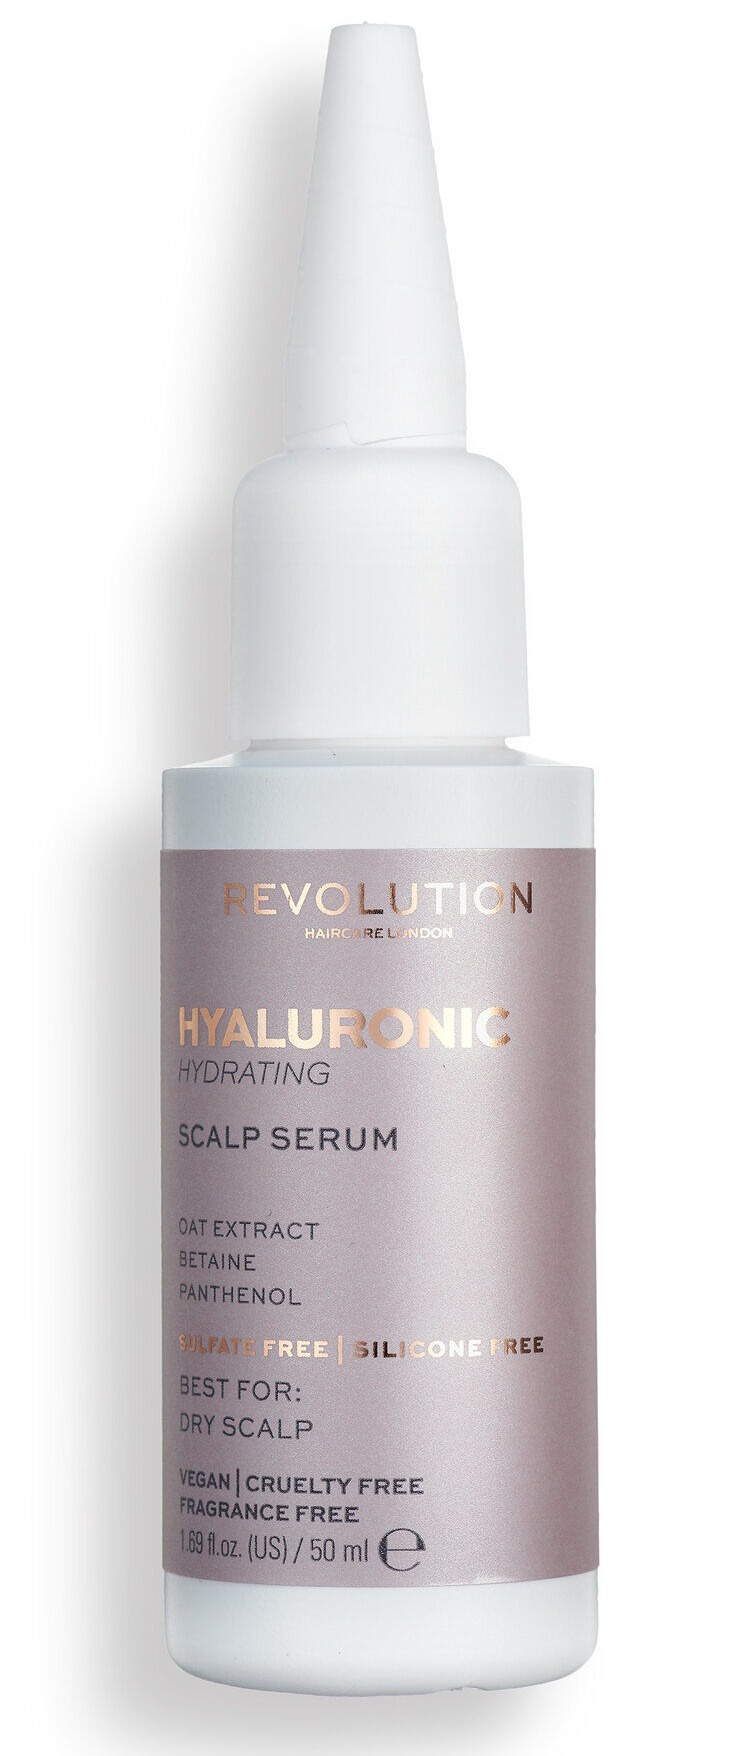 Revolution Hyaluronic Acid Hydrating Scalp Serum